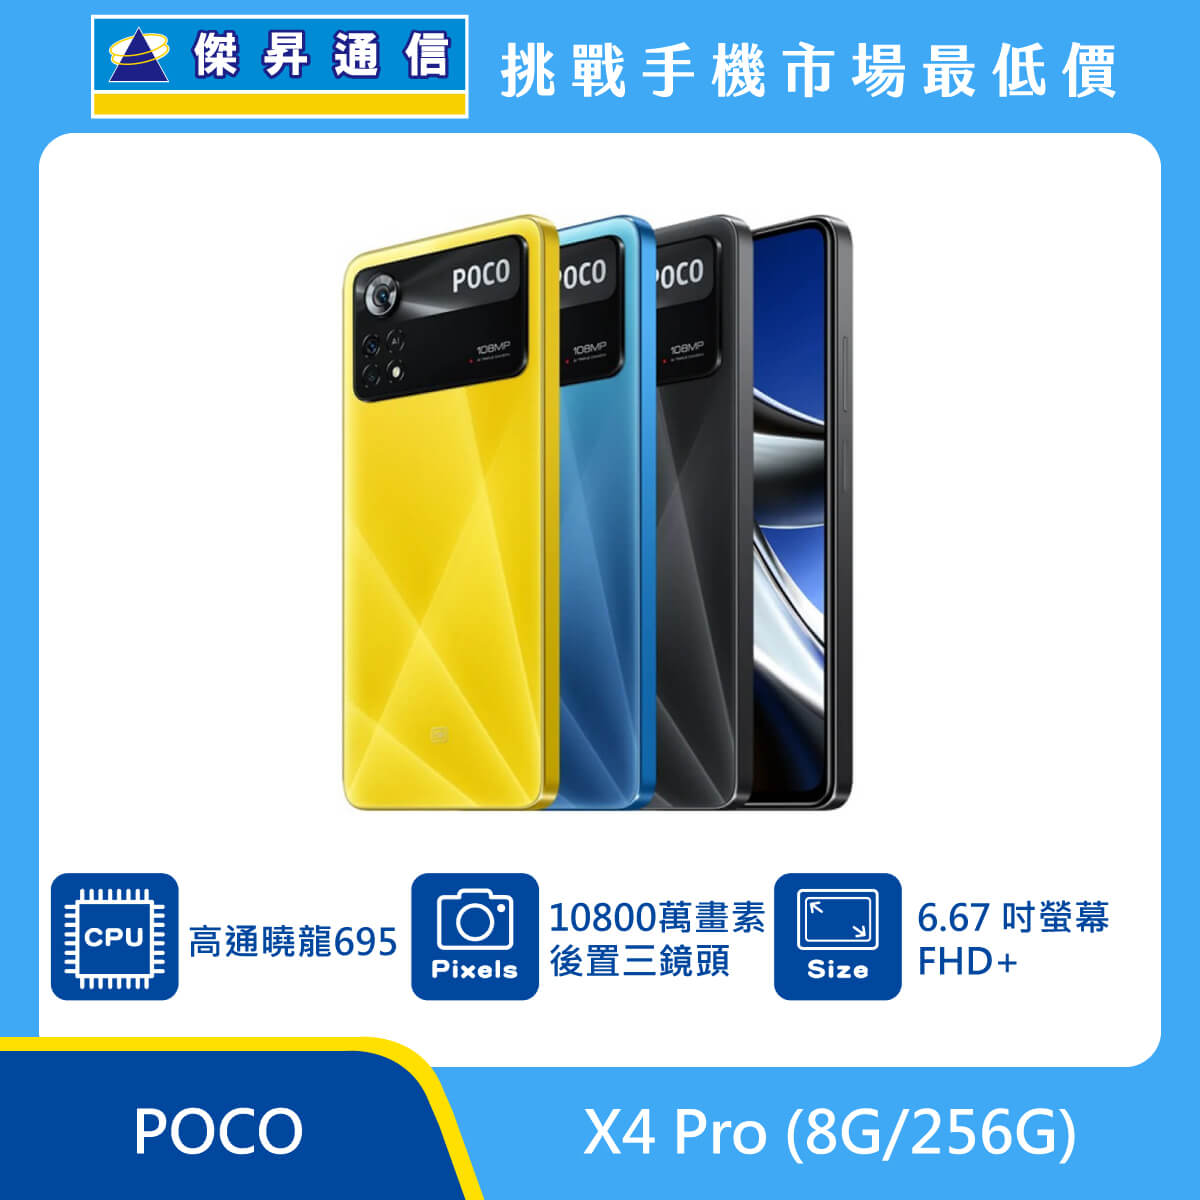 POCO X4 Pro (8G/256G)